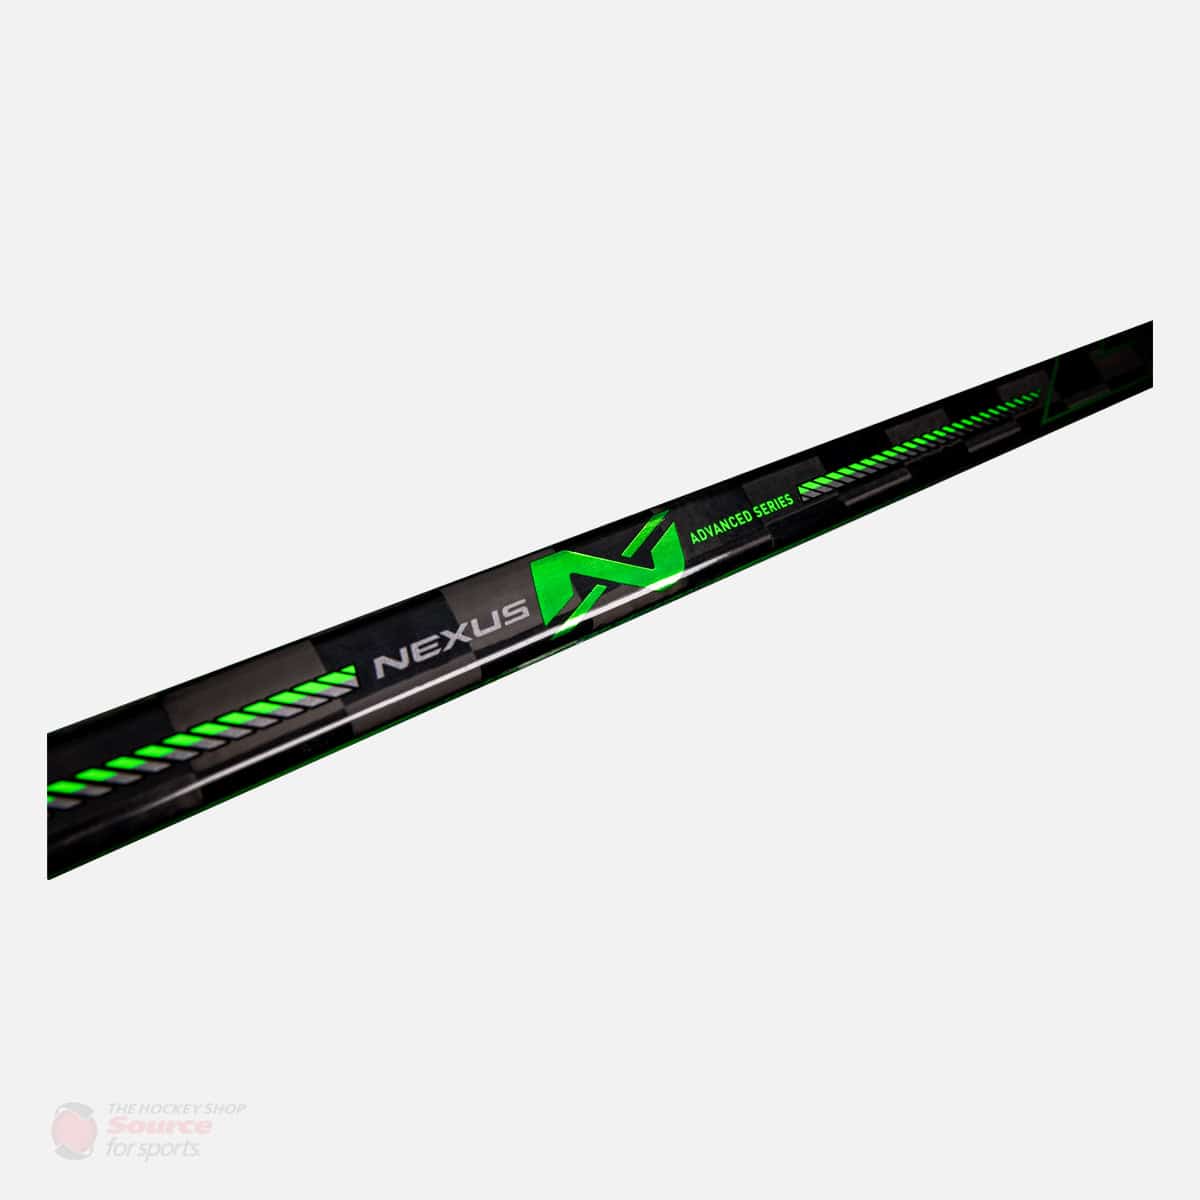 Bauer Nexus ADV Intermediate Hockey Stick